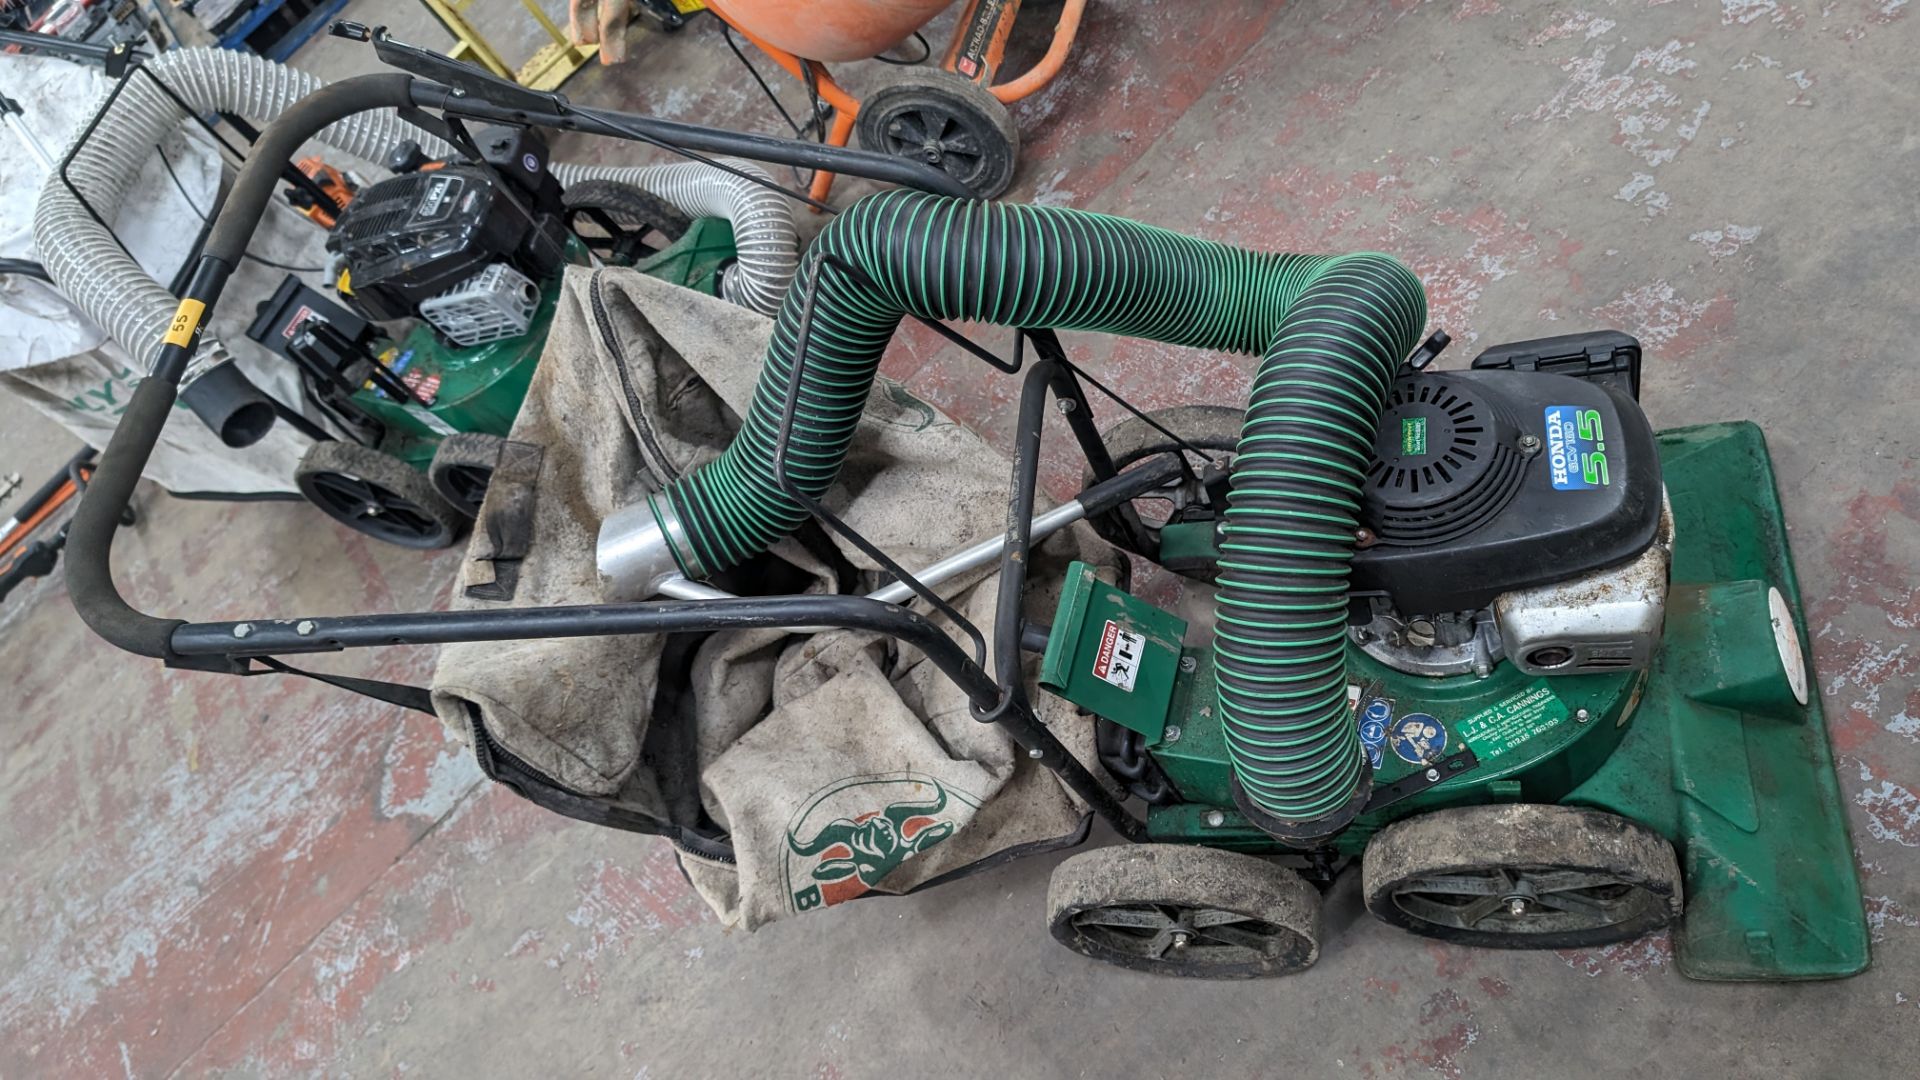 Billy Goat Pro lawn vacuum powered by Honda GCV160 5.5 engine, model KD512HC - Image 8 of 8